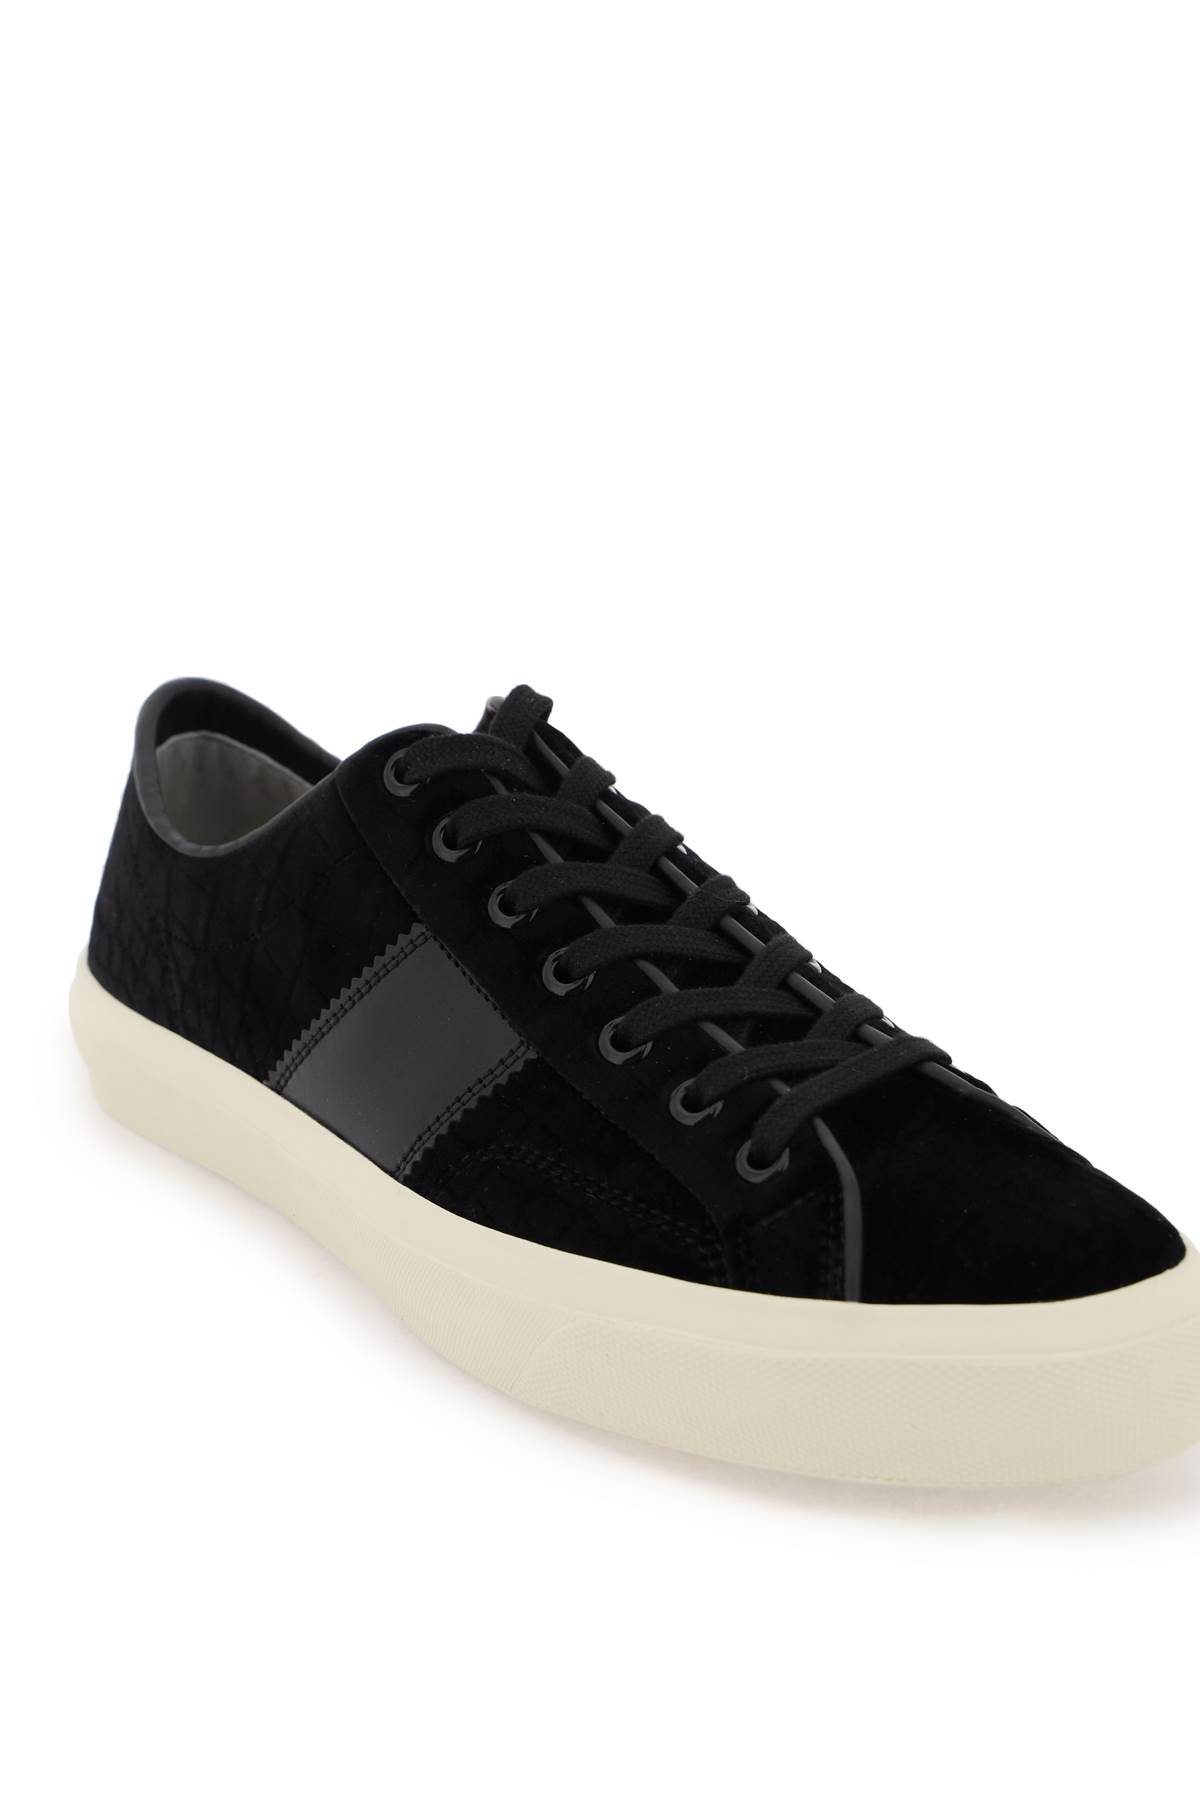 Shop Tom Ford Cambridge Sneakers In Black Cream (black)